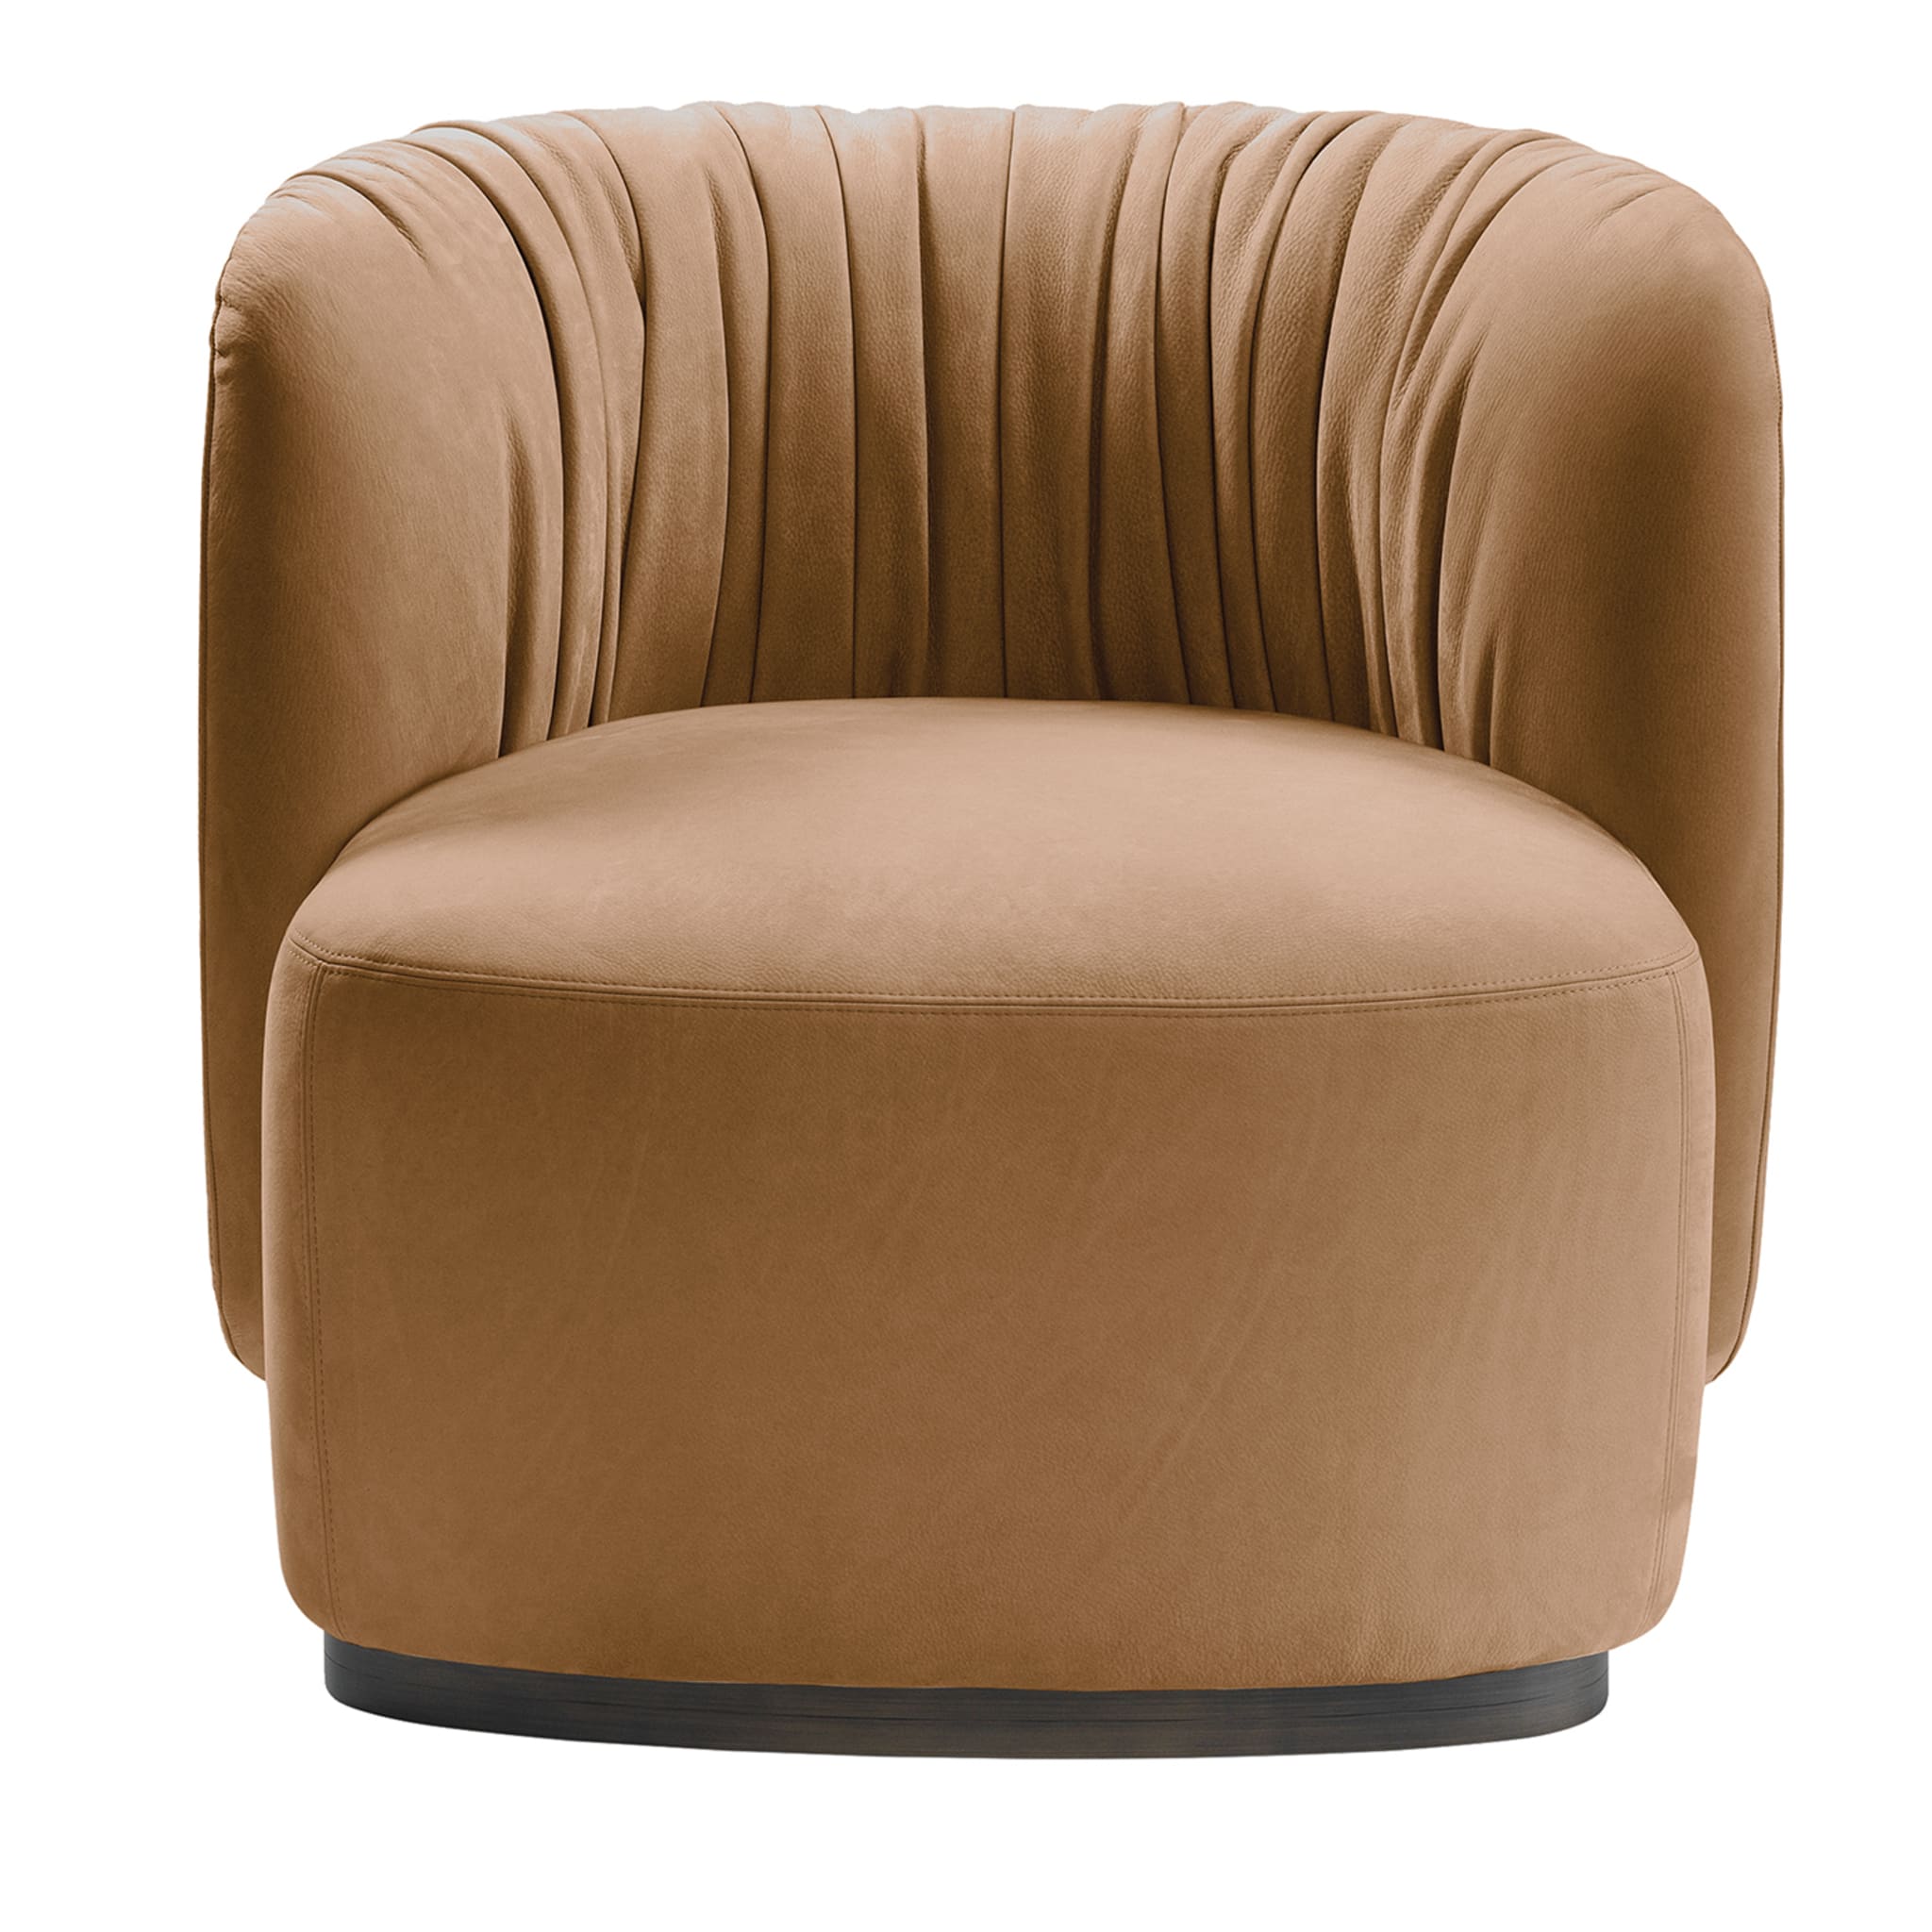 Sipario Light-Brown Armchair by Lorenza Bozzoli - Main view